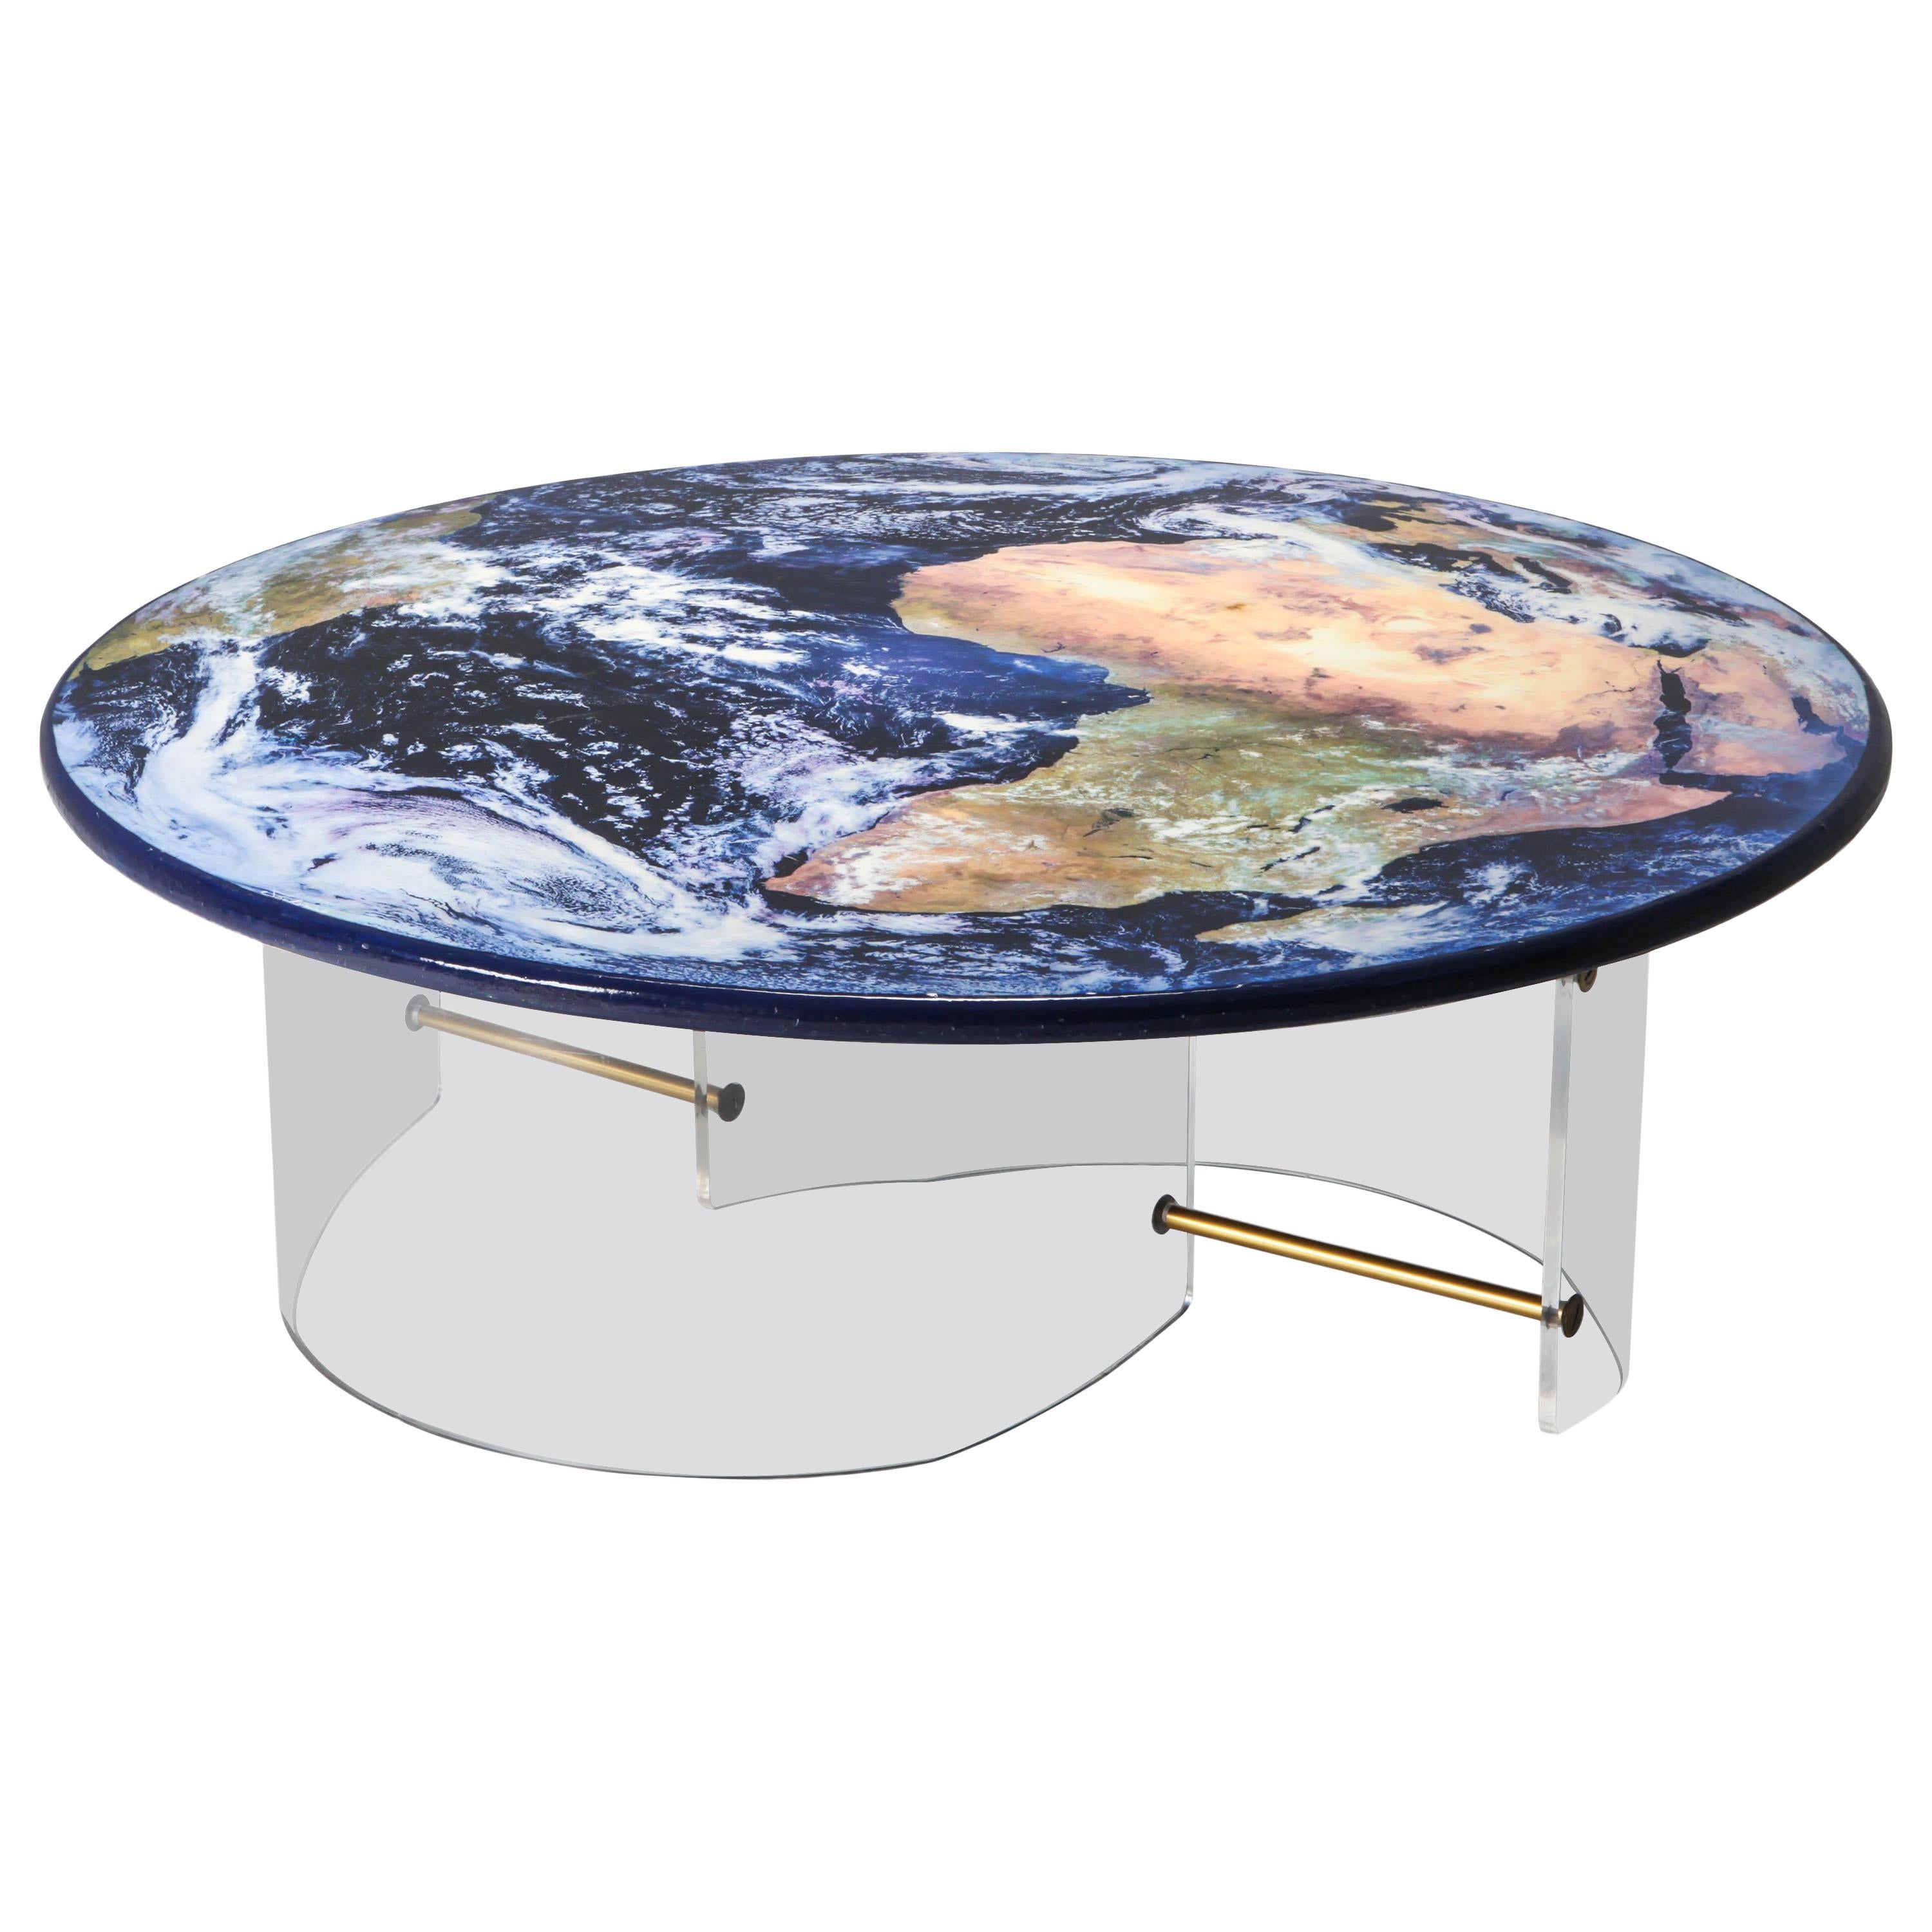 Unique Globe Table with Plexi Base For Sale